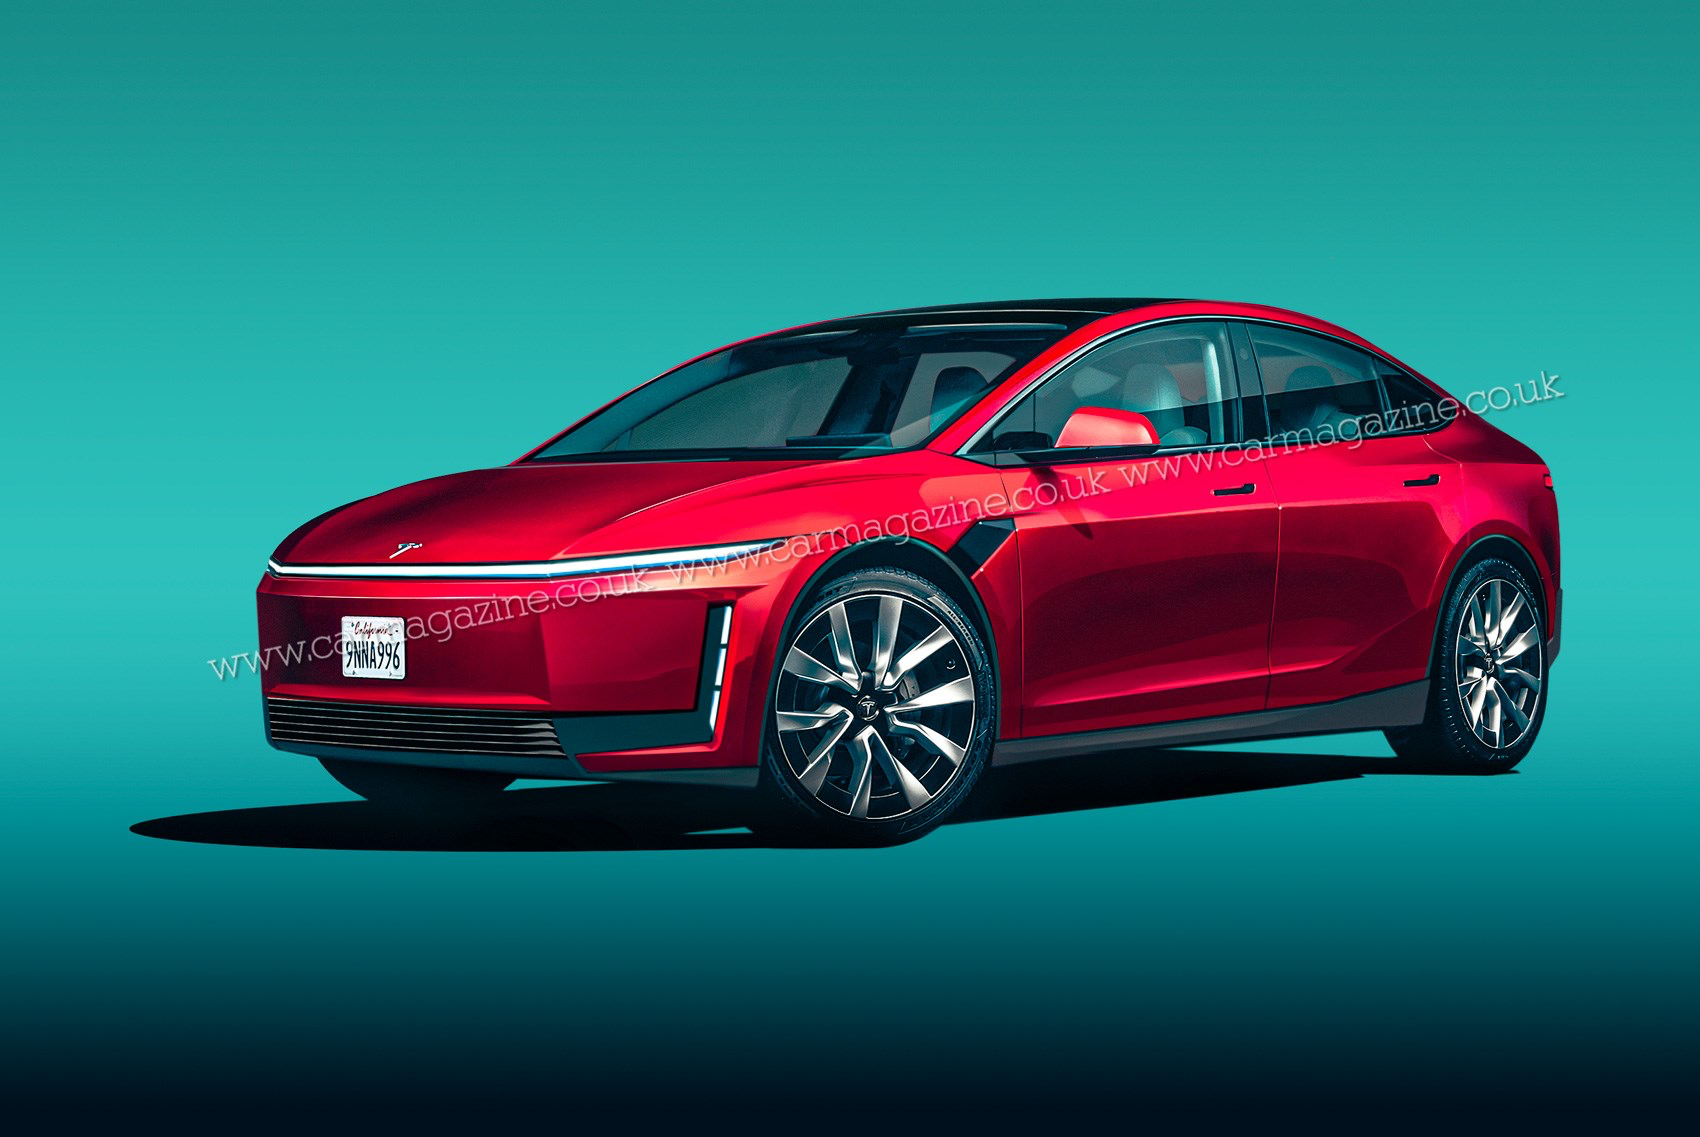 Tesla scraps low-cost car plans amid fierce Chinese EV competition, Reuters